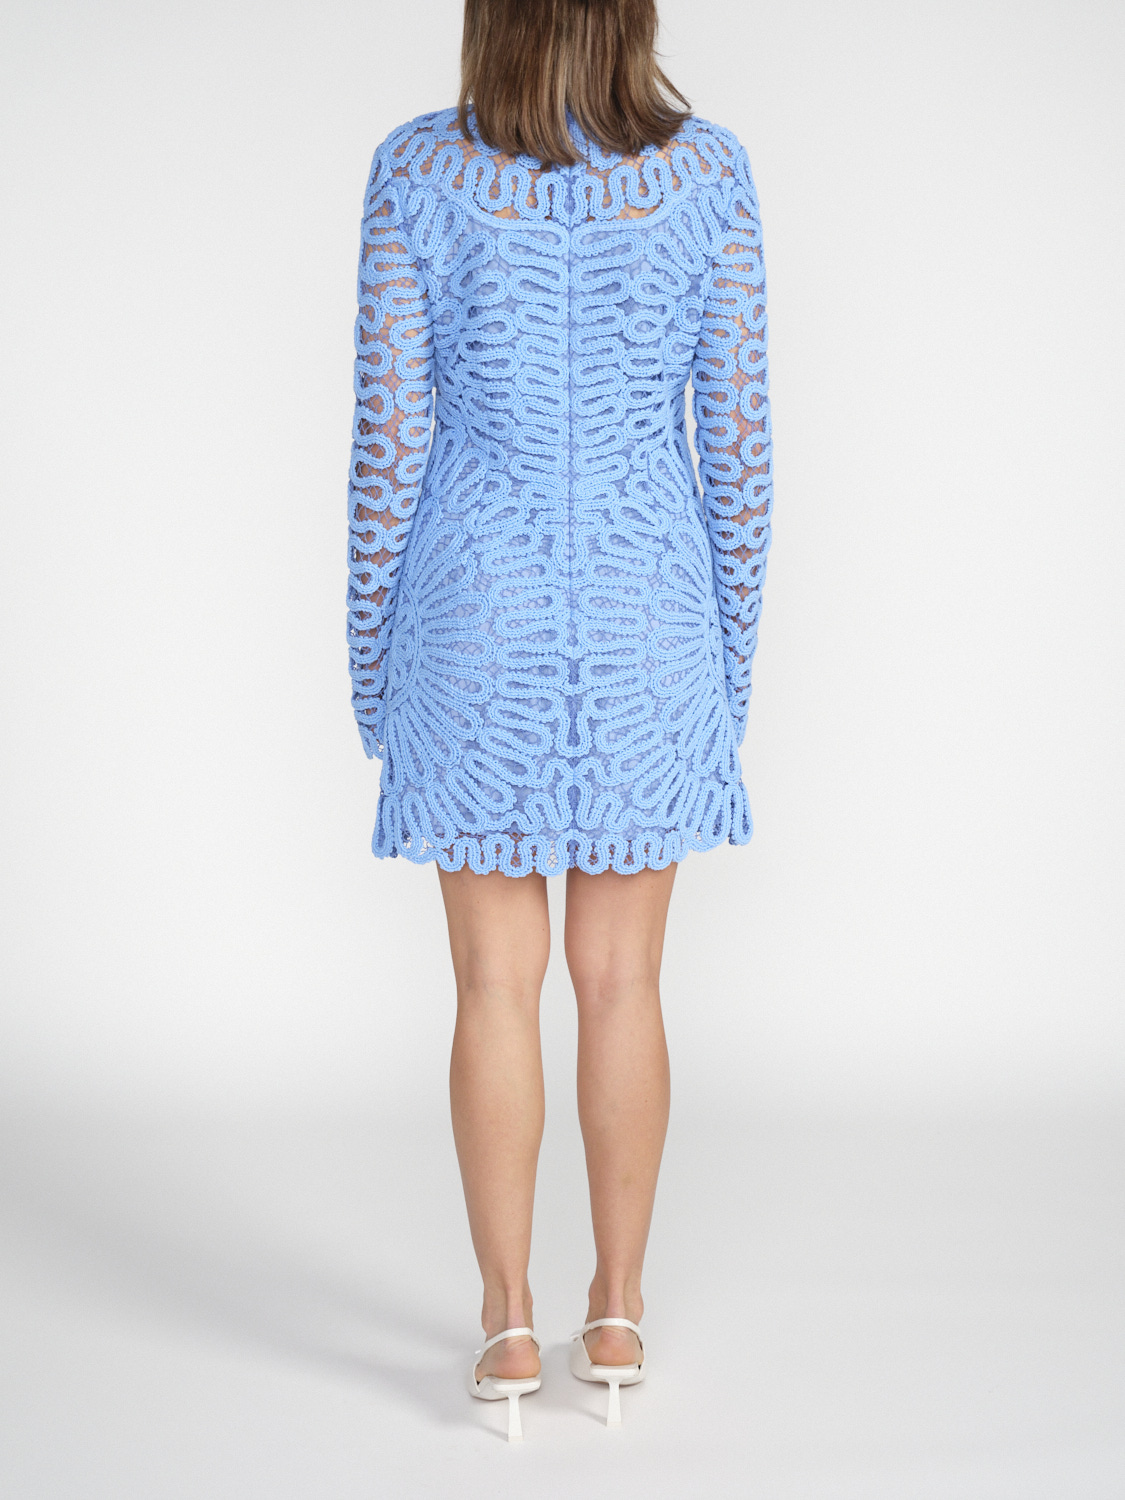 Simkhai Mccall – Dress with mechanical crochet embroidery  blue 36